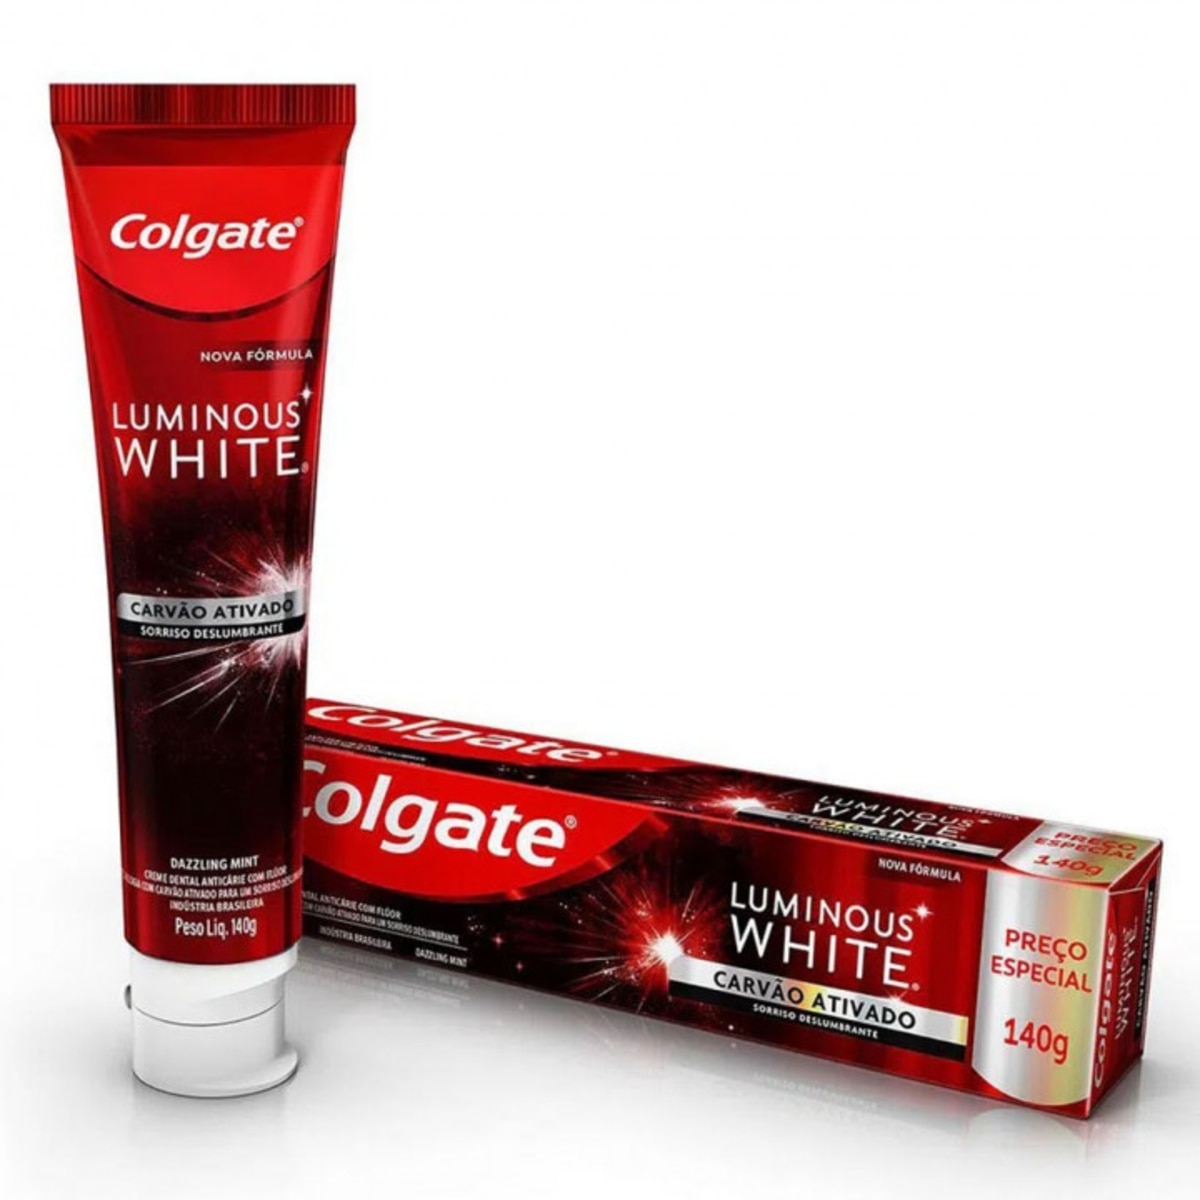 Creme Dental Colgate Luminous White Carvao Ativado 140g